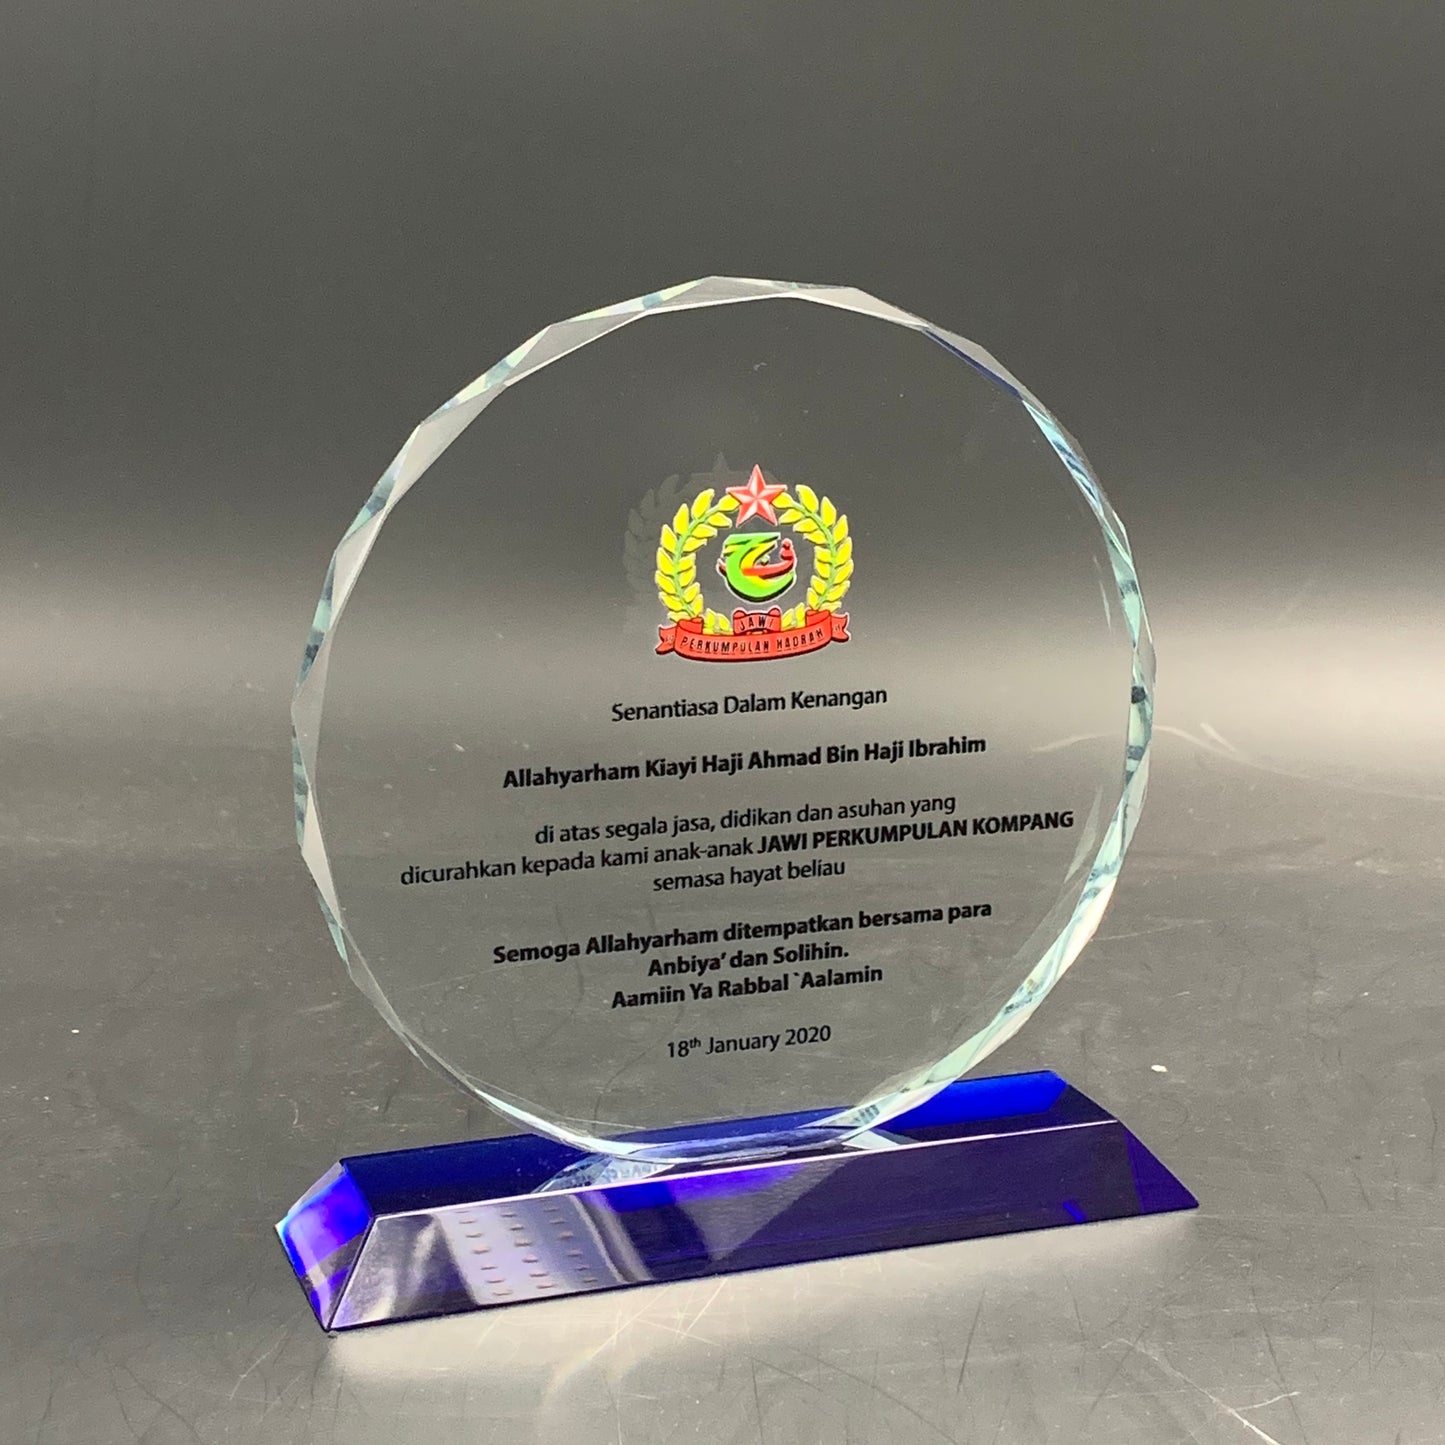 Brillant Round Crystal Trophy Award with Blue Base